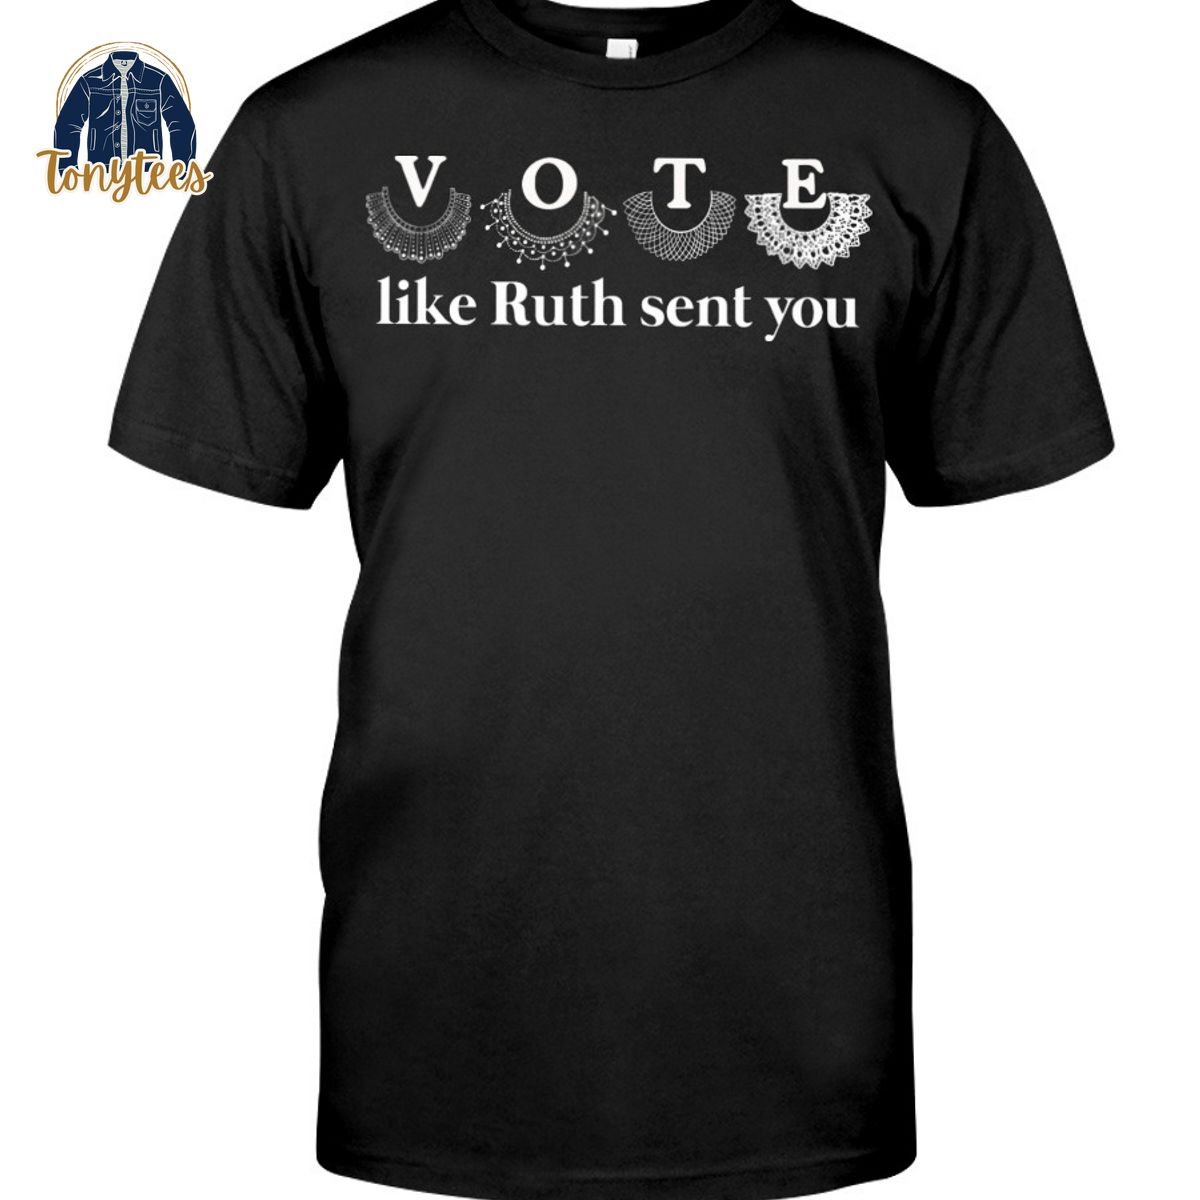 Feminist VOTE like ruth sent you shirt